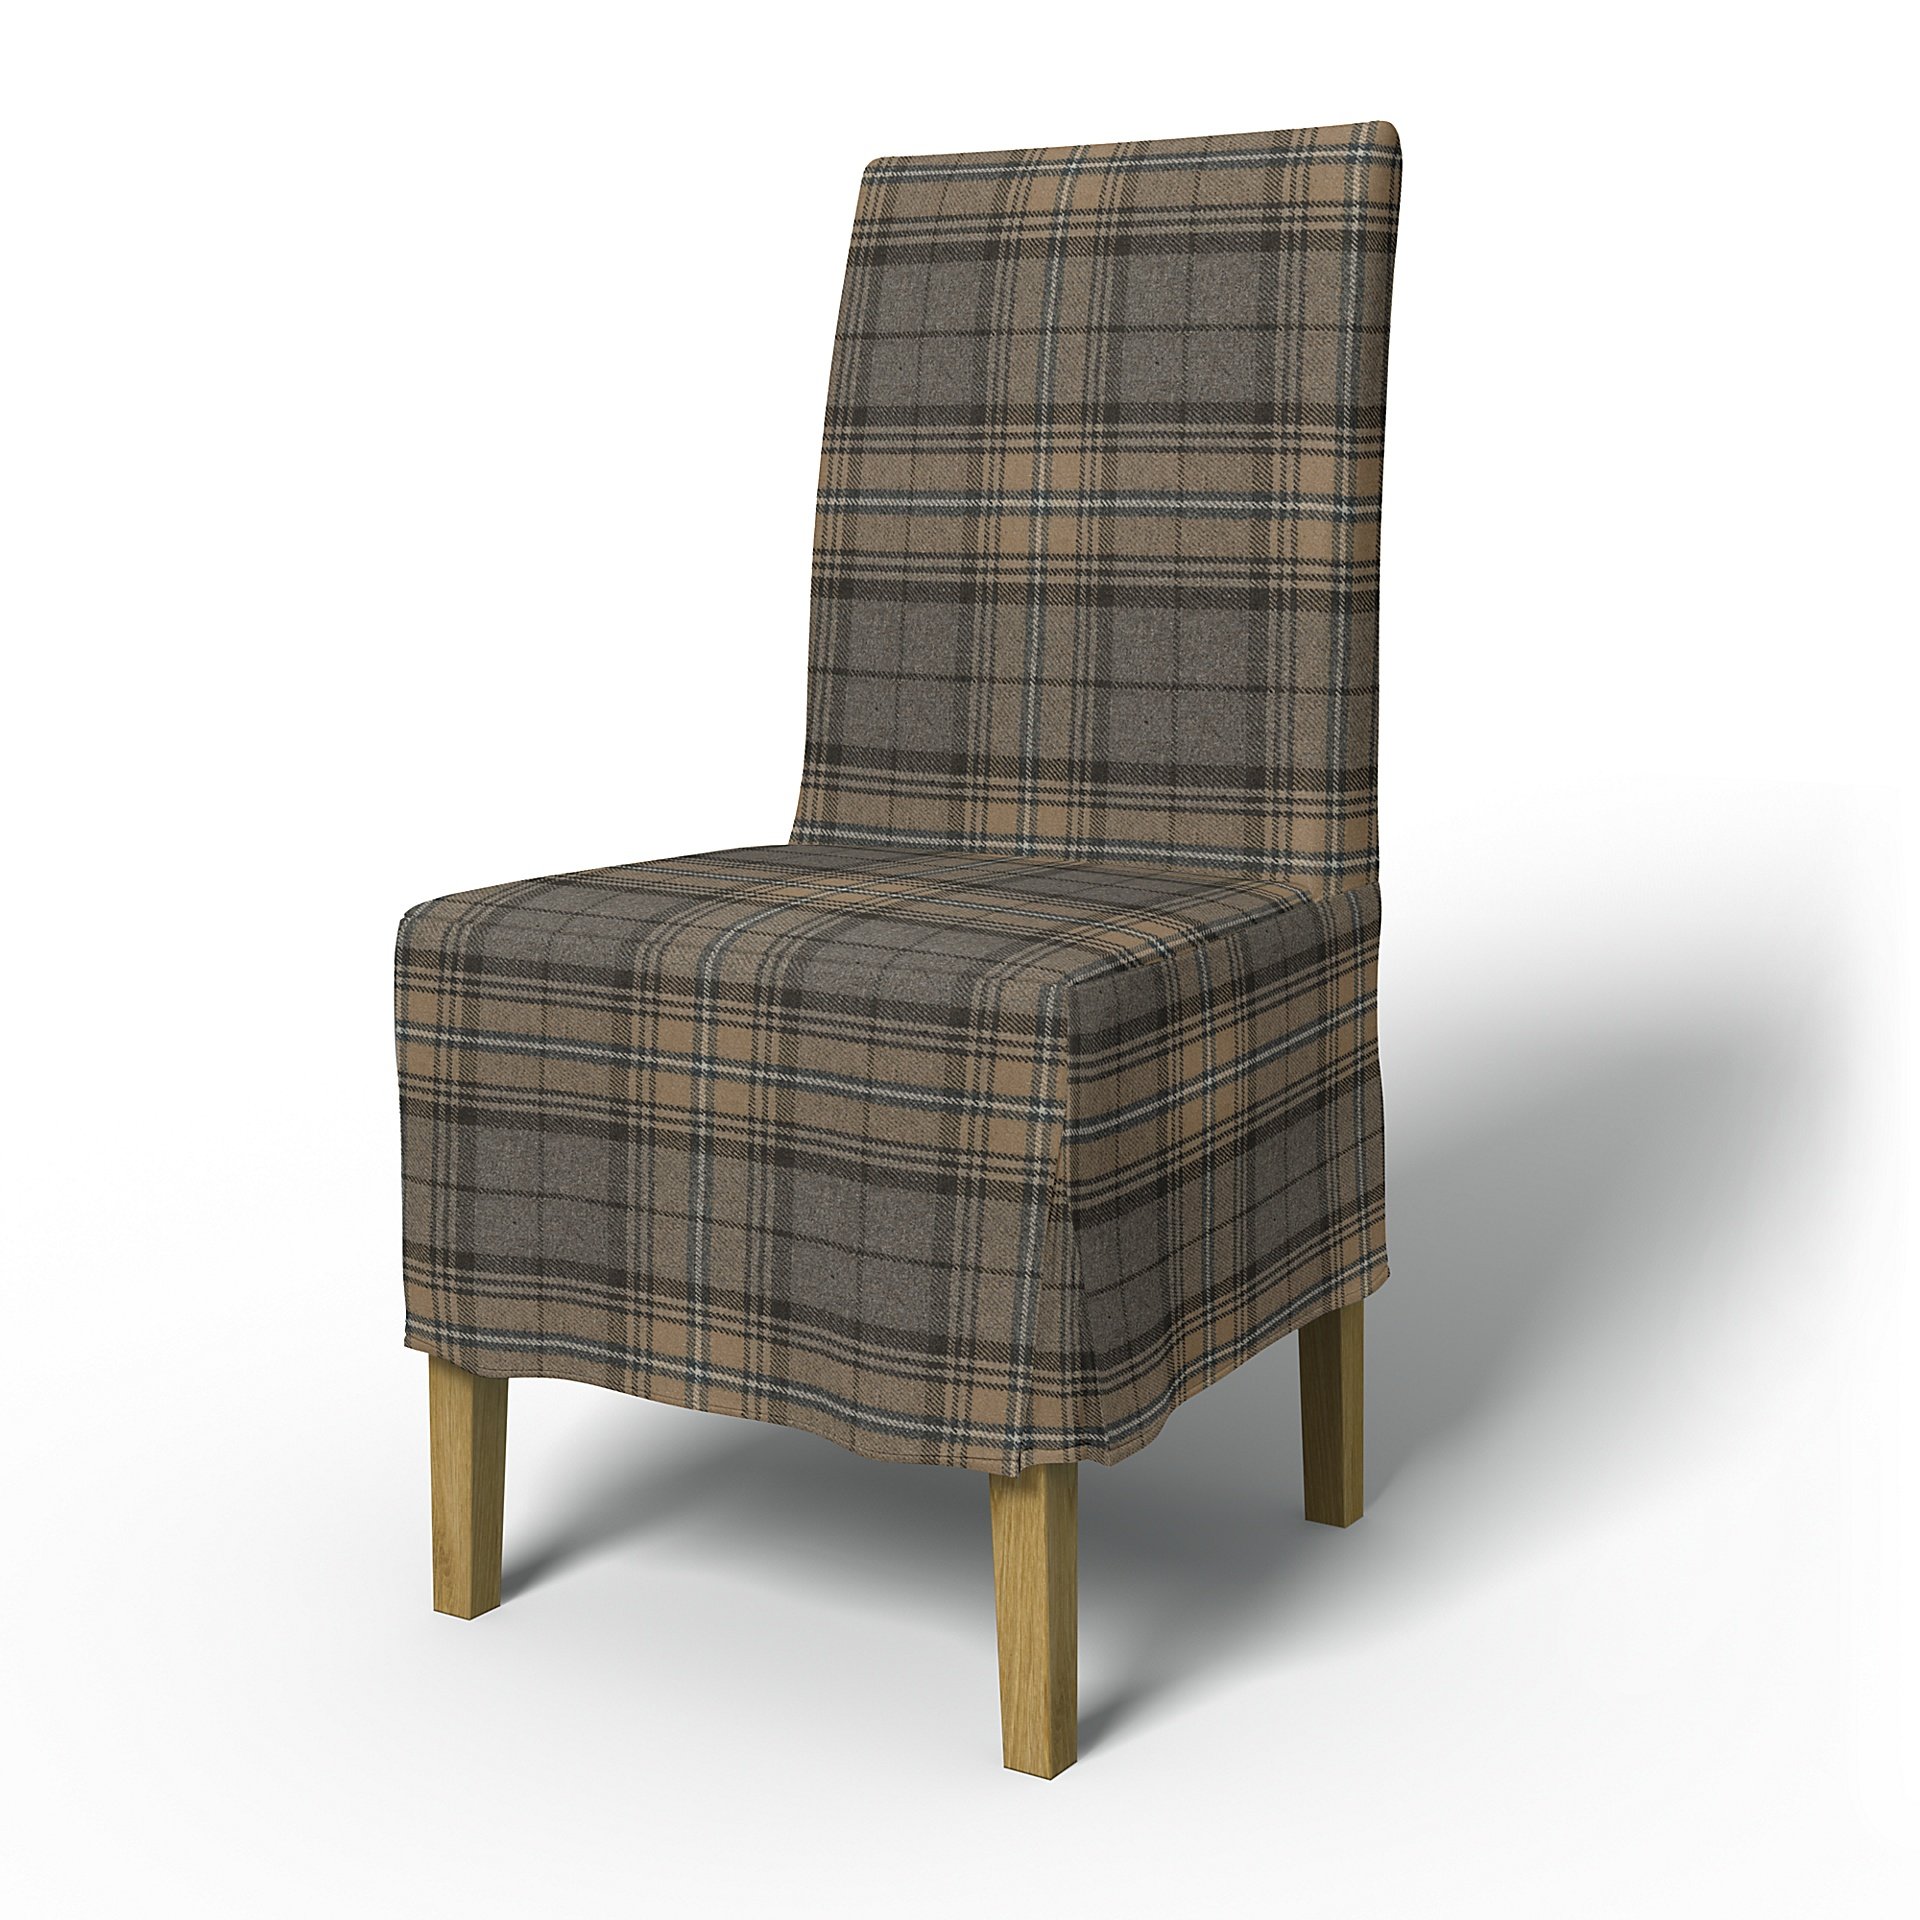 IKEA - Henriksdal Dining Chair Cover Medium skirt with Box Pleat (Standard model), Bark Brown, Wool 